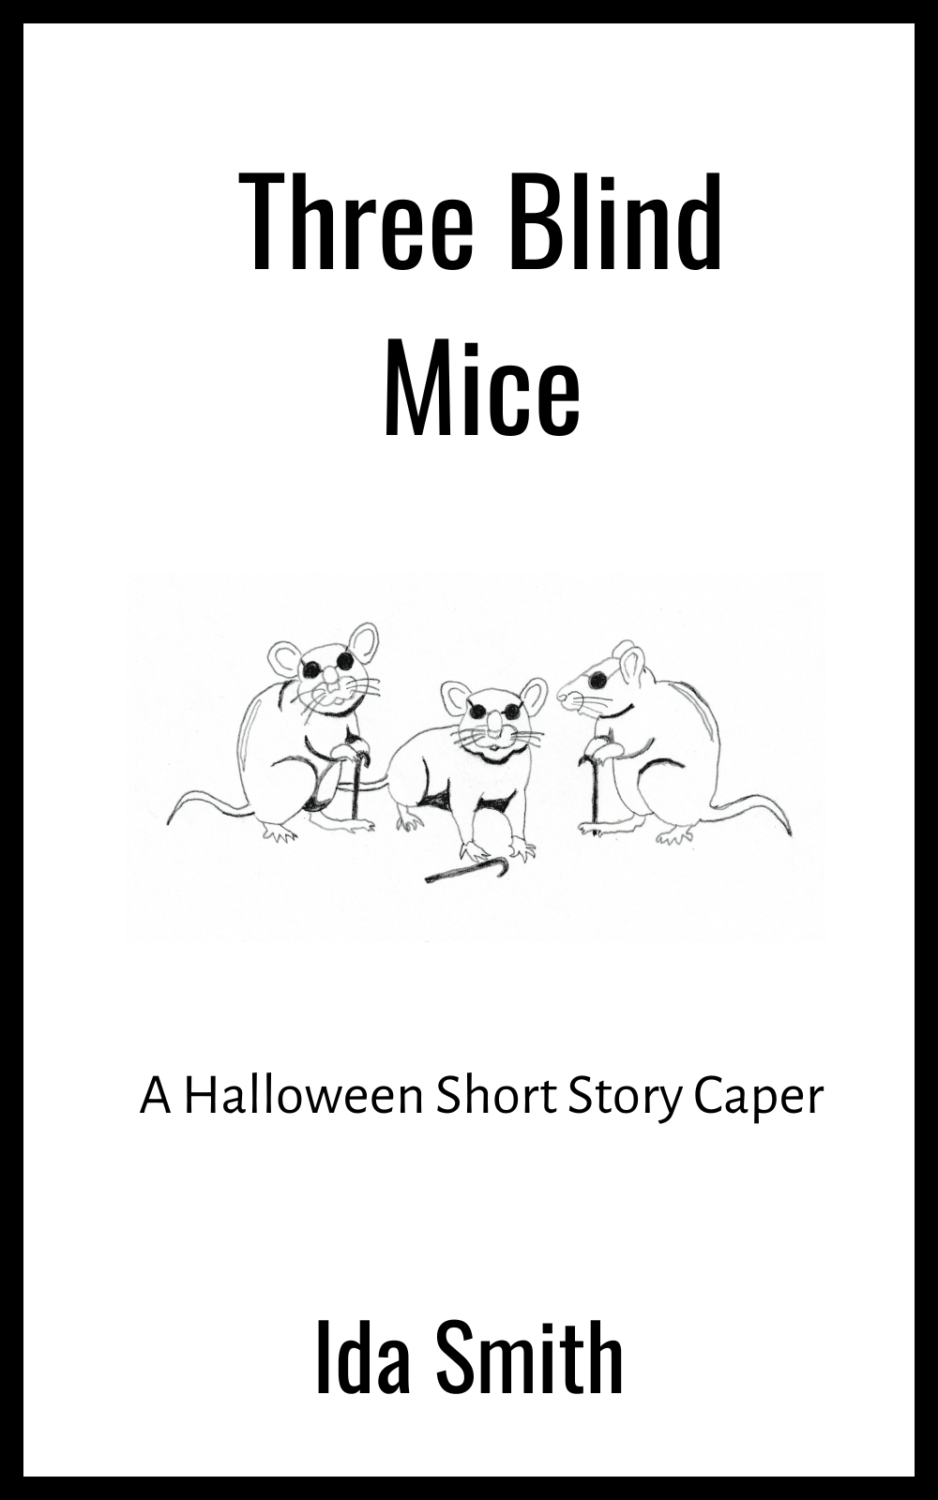 Three Blind Mice - A Halloween Short Story Caper.